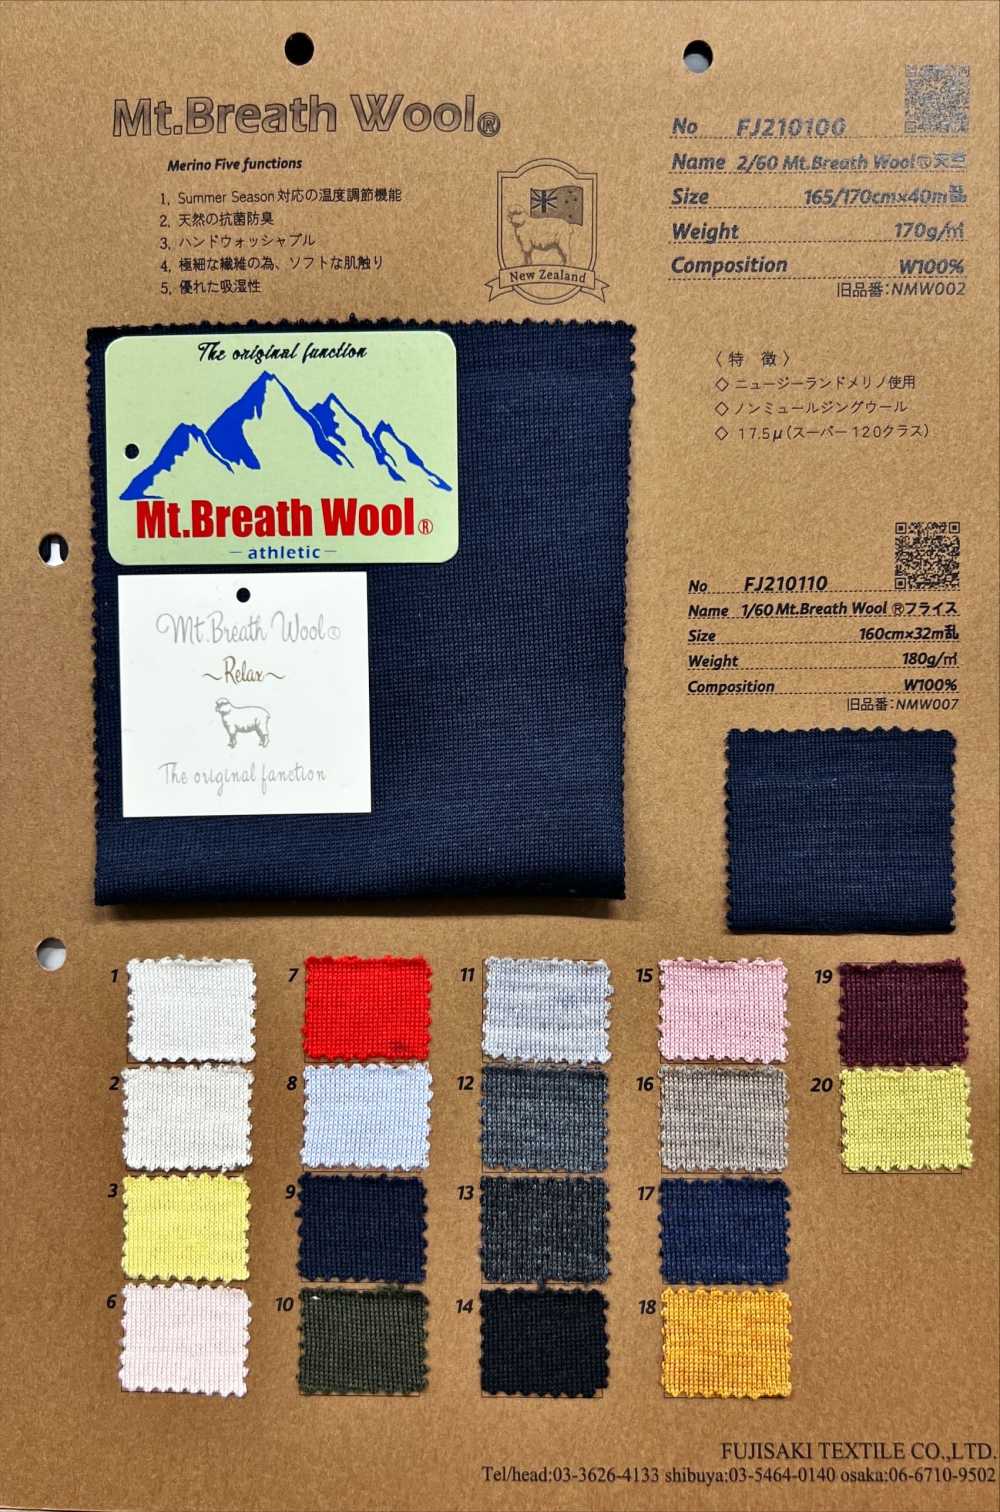 FJ210100 Jersey De Lana 2/60 Mt. Breath[Fabrica Textil] Fujisaki Textile